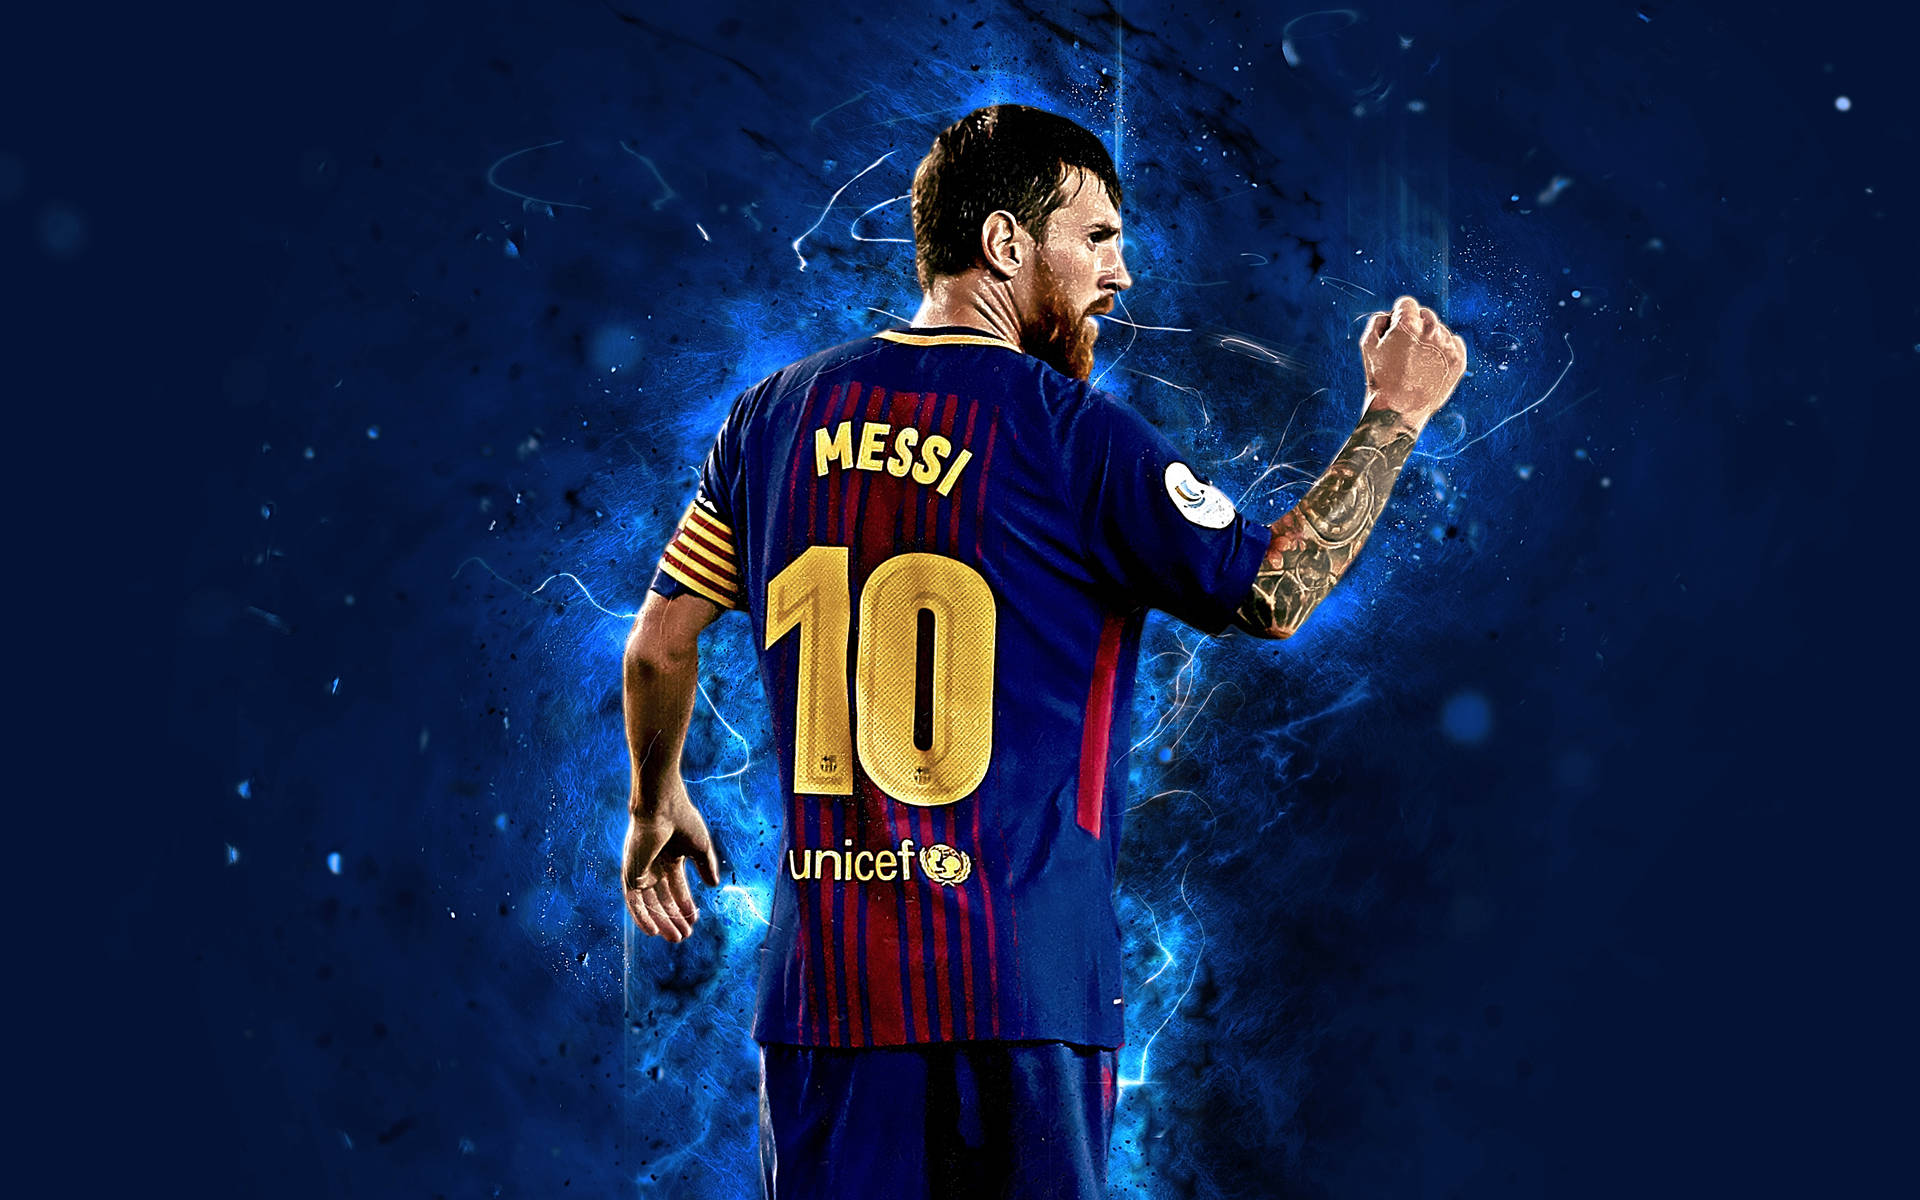 Lionel Messi 2020 Raised Fist Wallpaper